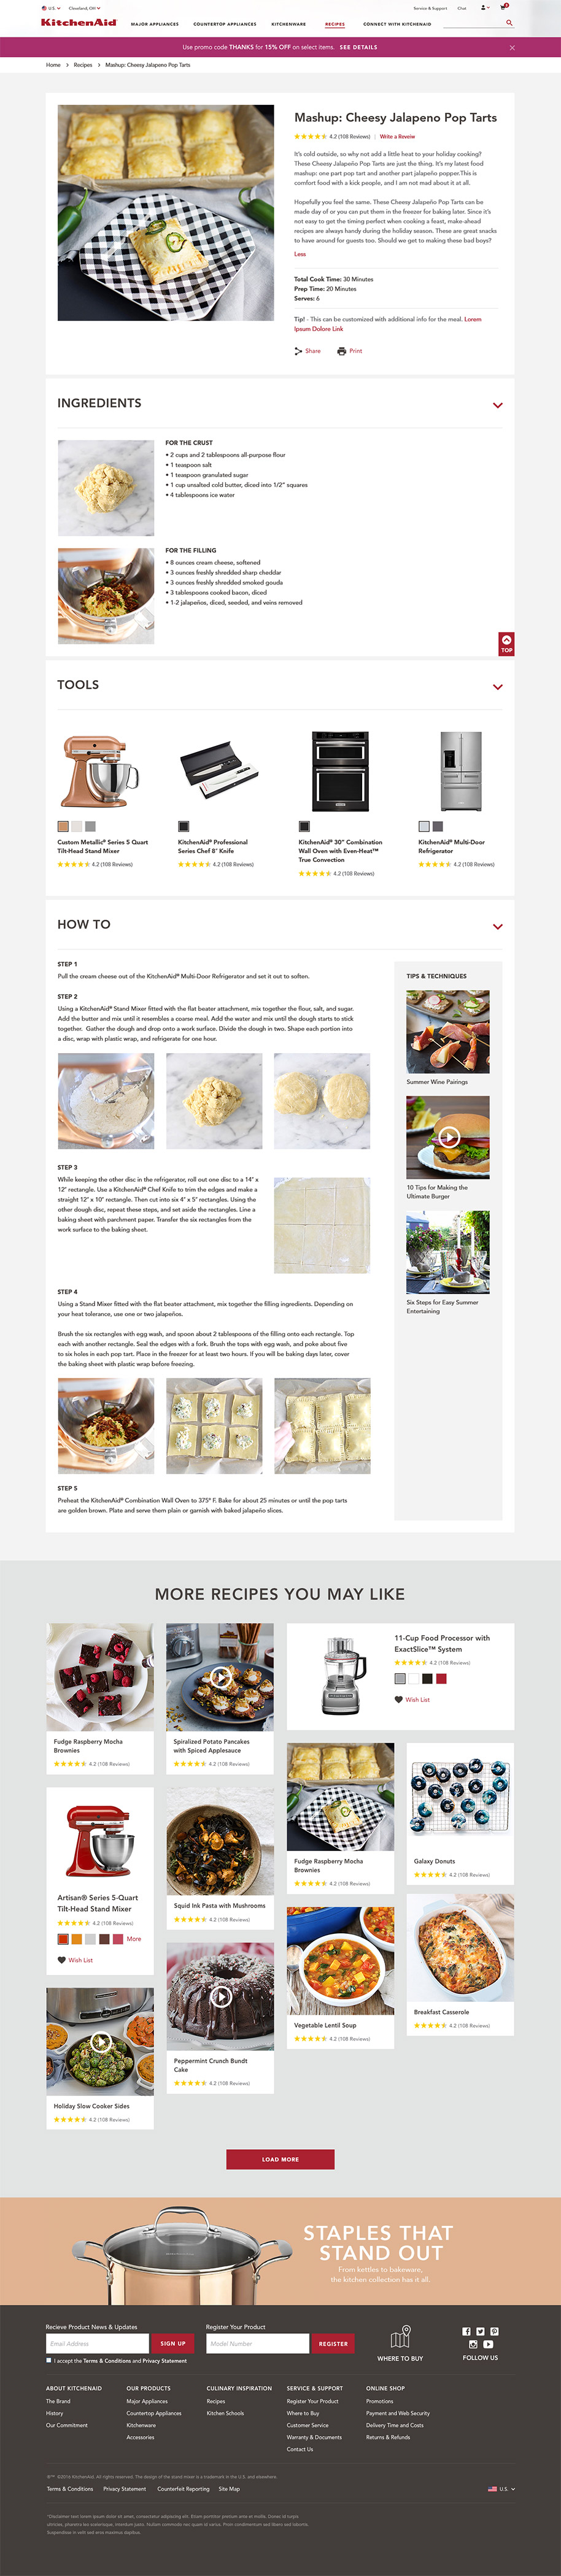 KitchenAid.com recipe detail page